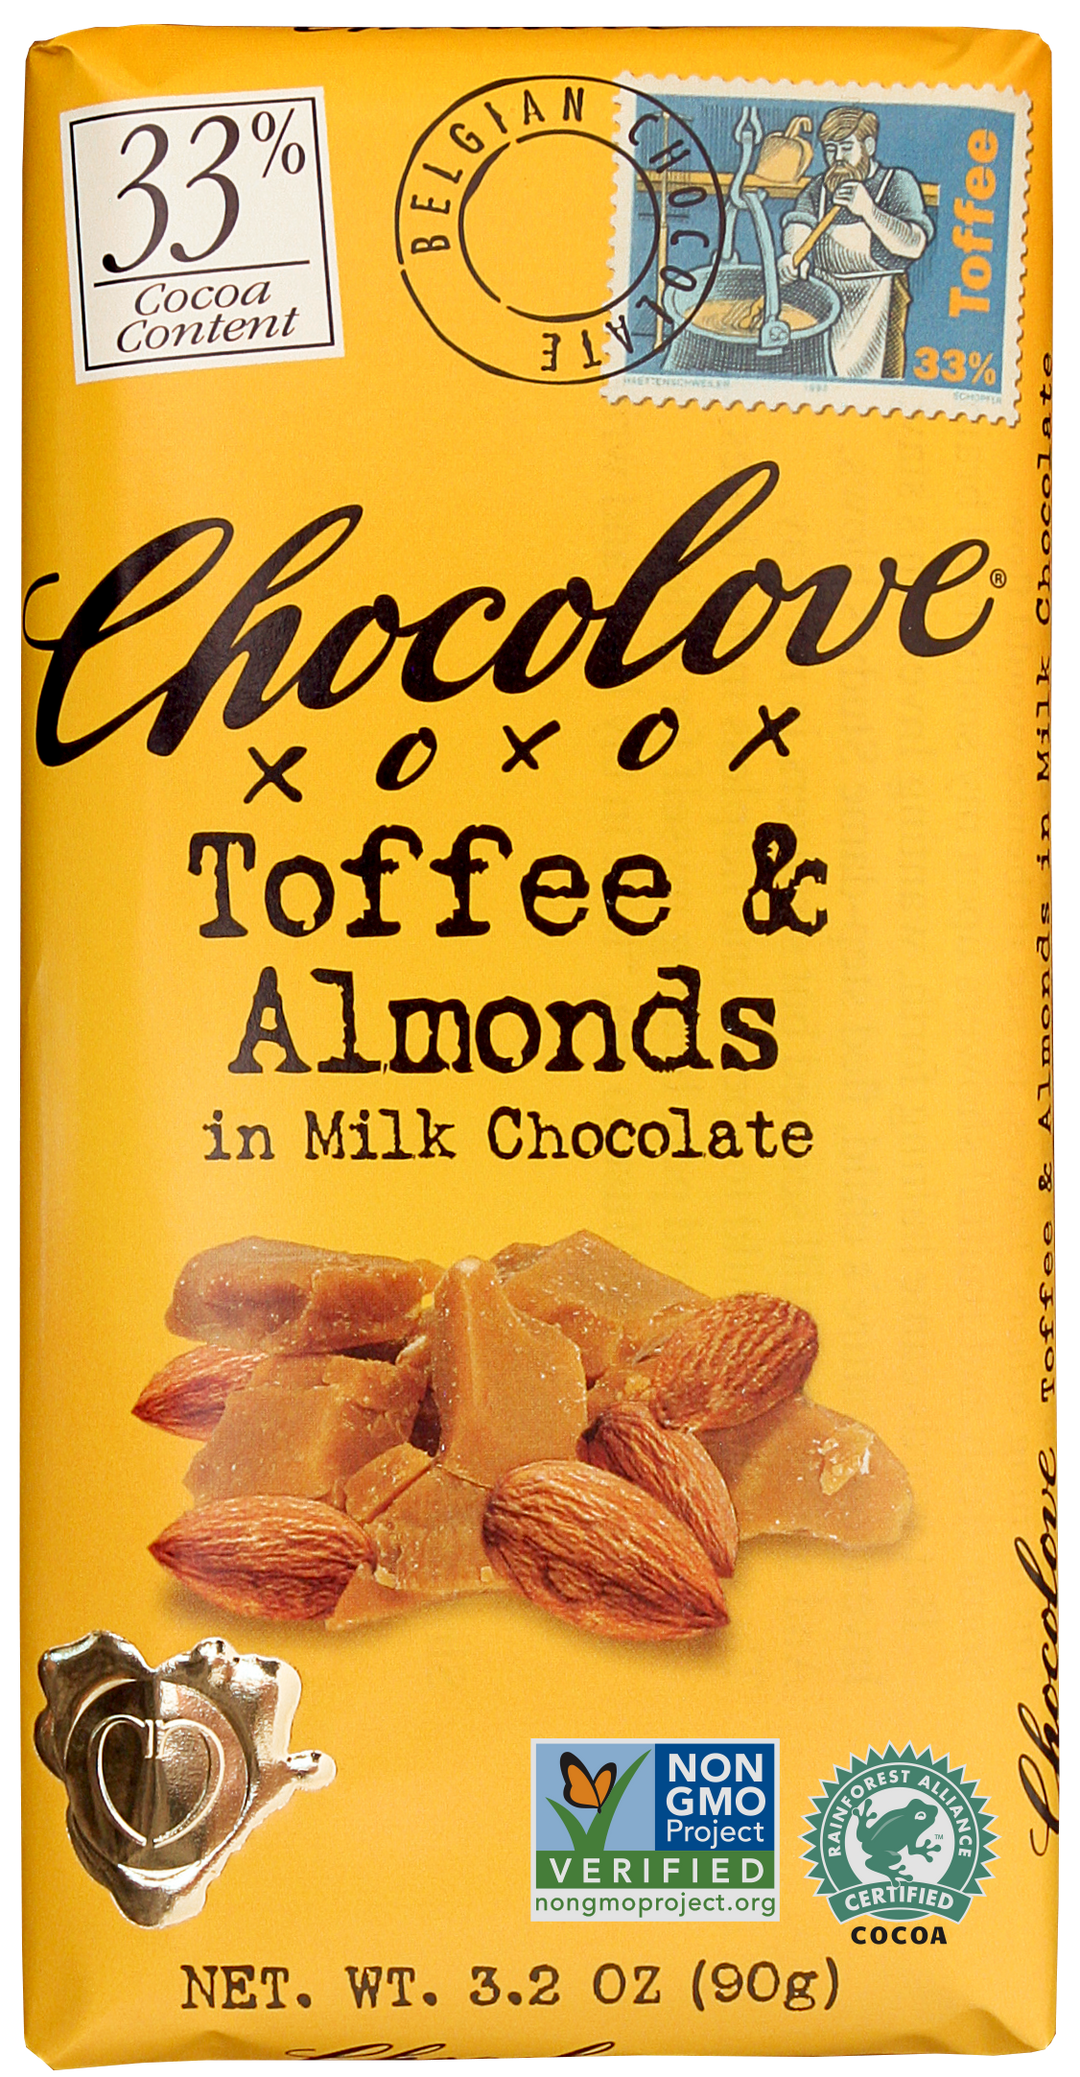 Chocolove Toffee & Almonds In Milk Chocolate-3.2 oz.-12/Box-12/Case